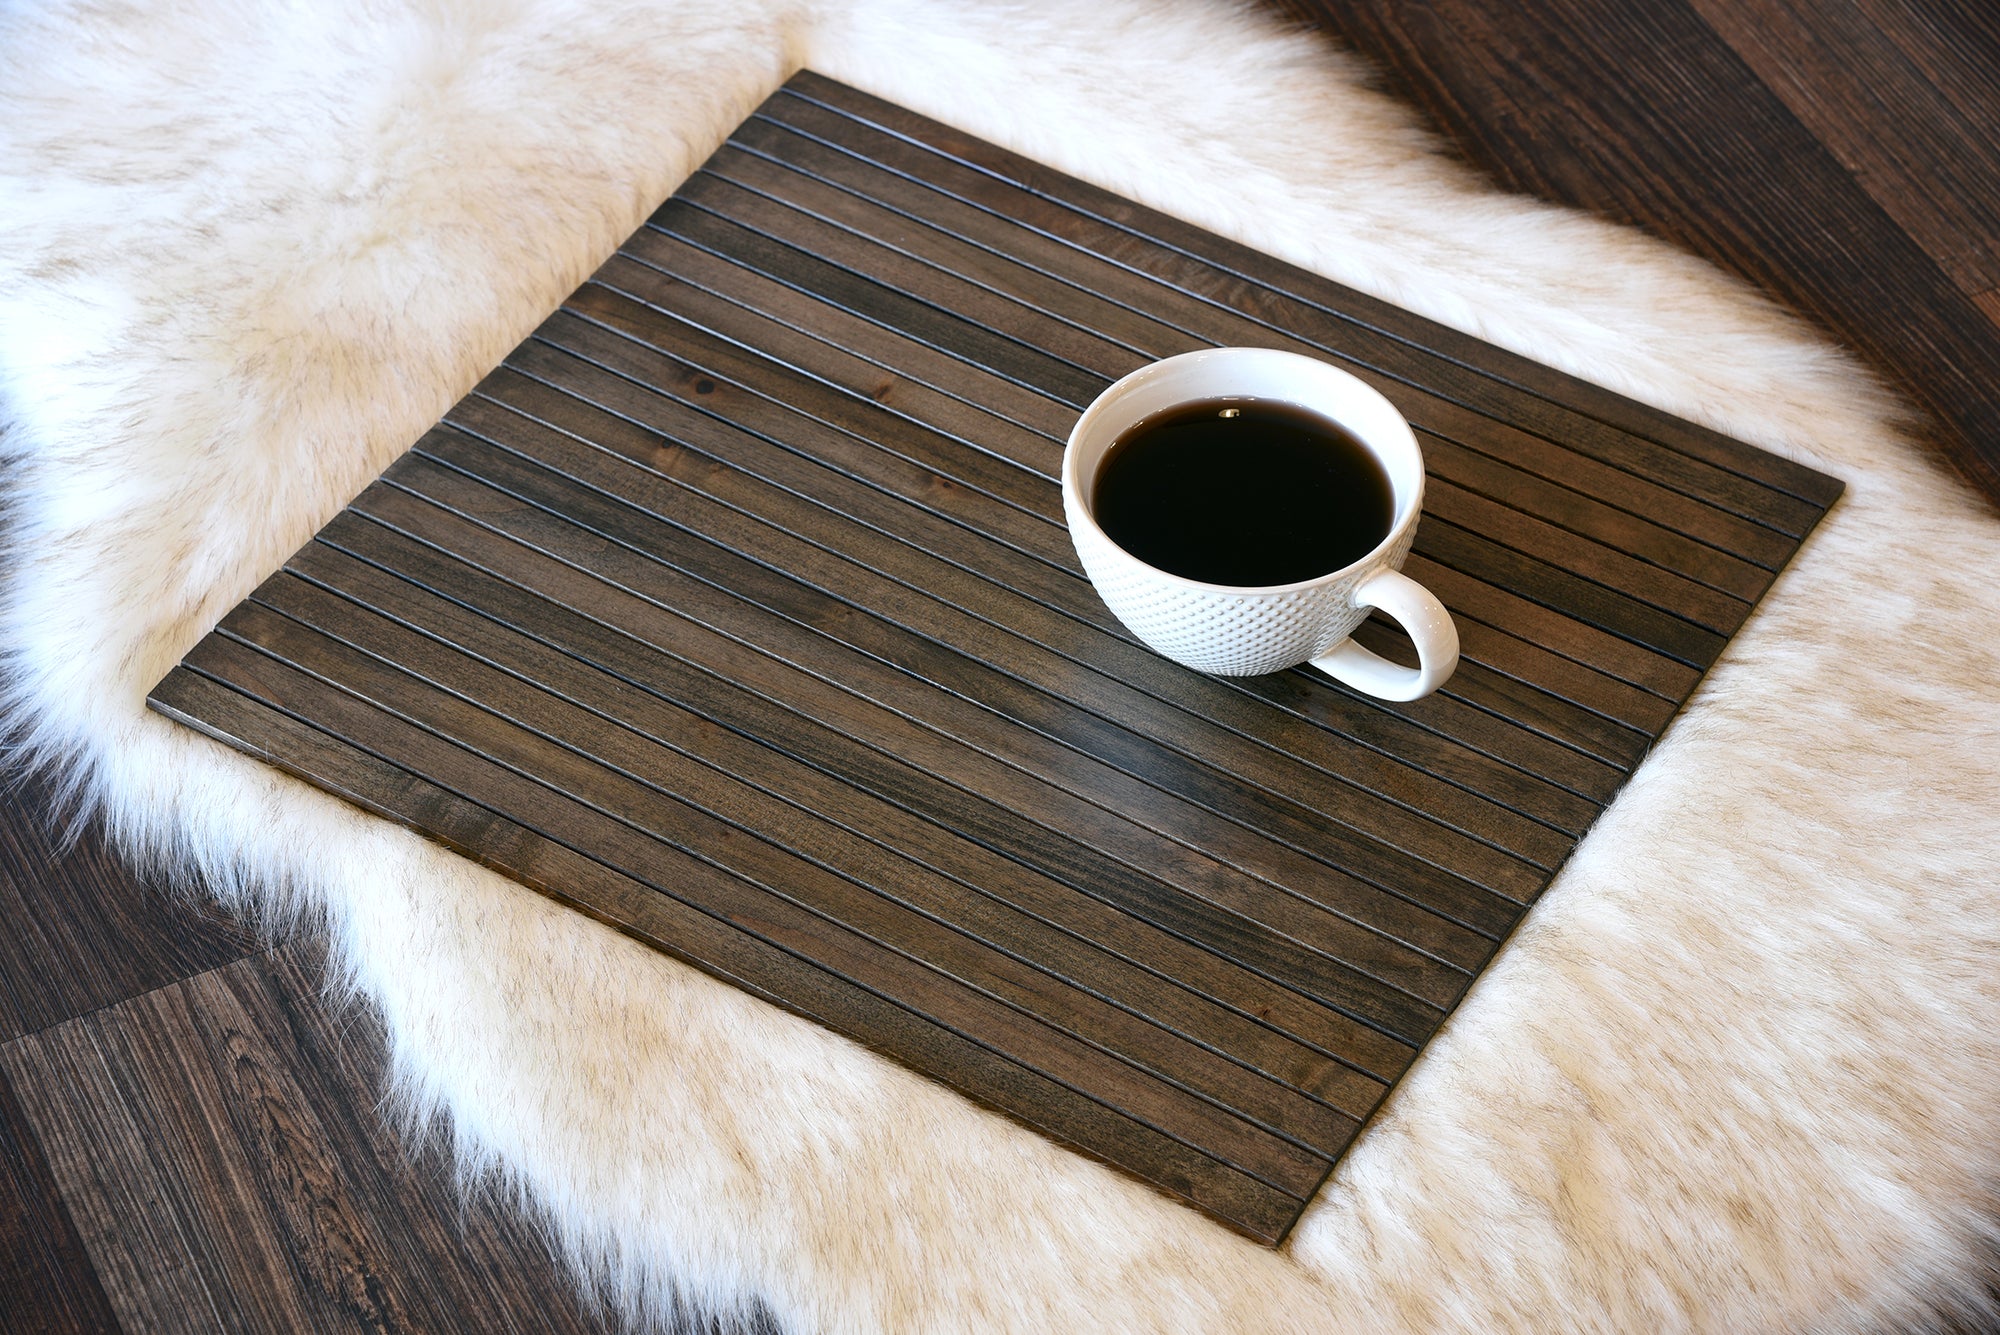 Sofa Tray Table Flexible Wood Slats - Light Espresso